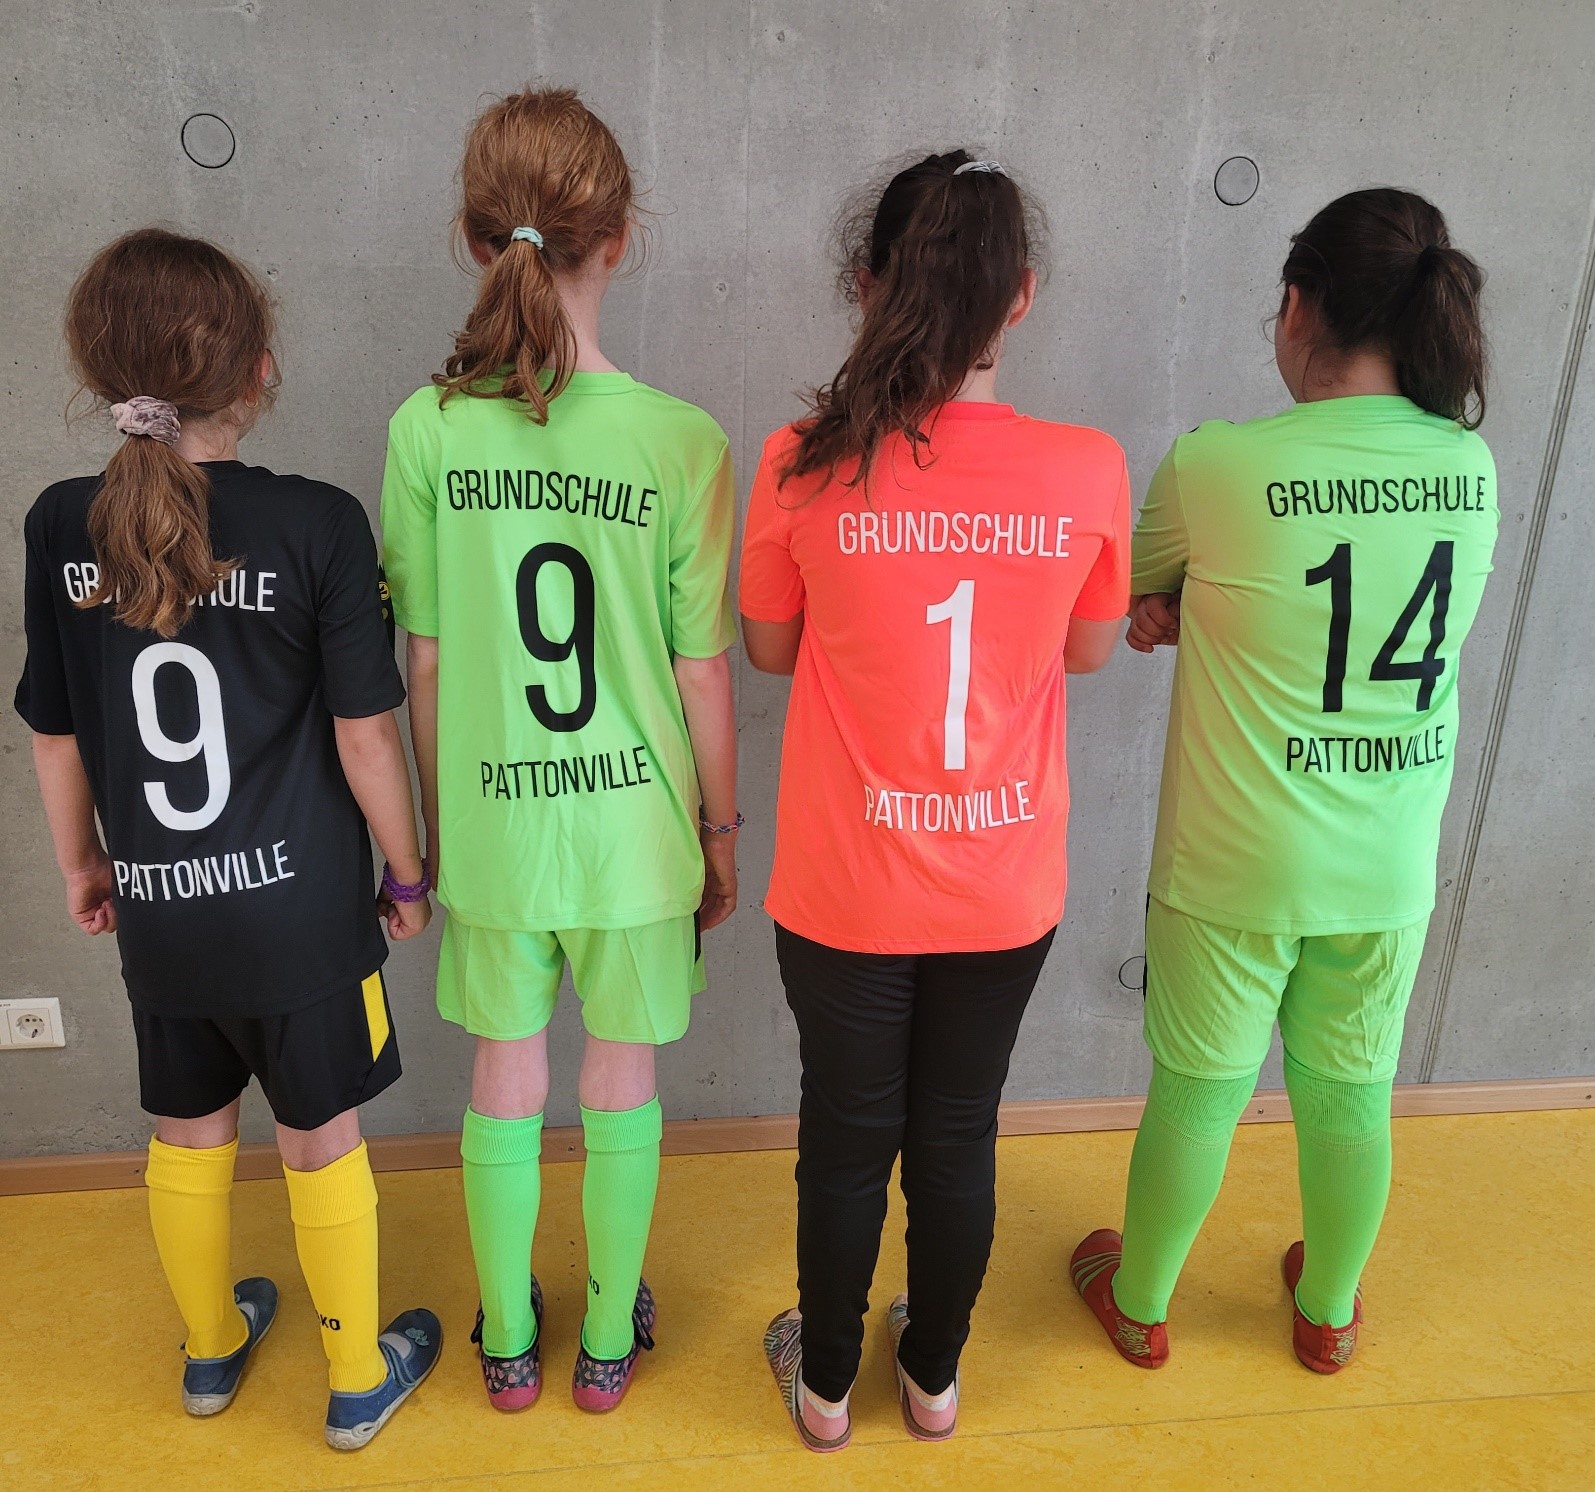 Jugend trainiert für Olympia: Mädchenfußball                                                                                               & Neue Trikots dank Förderverein!